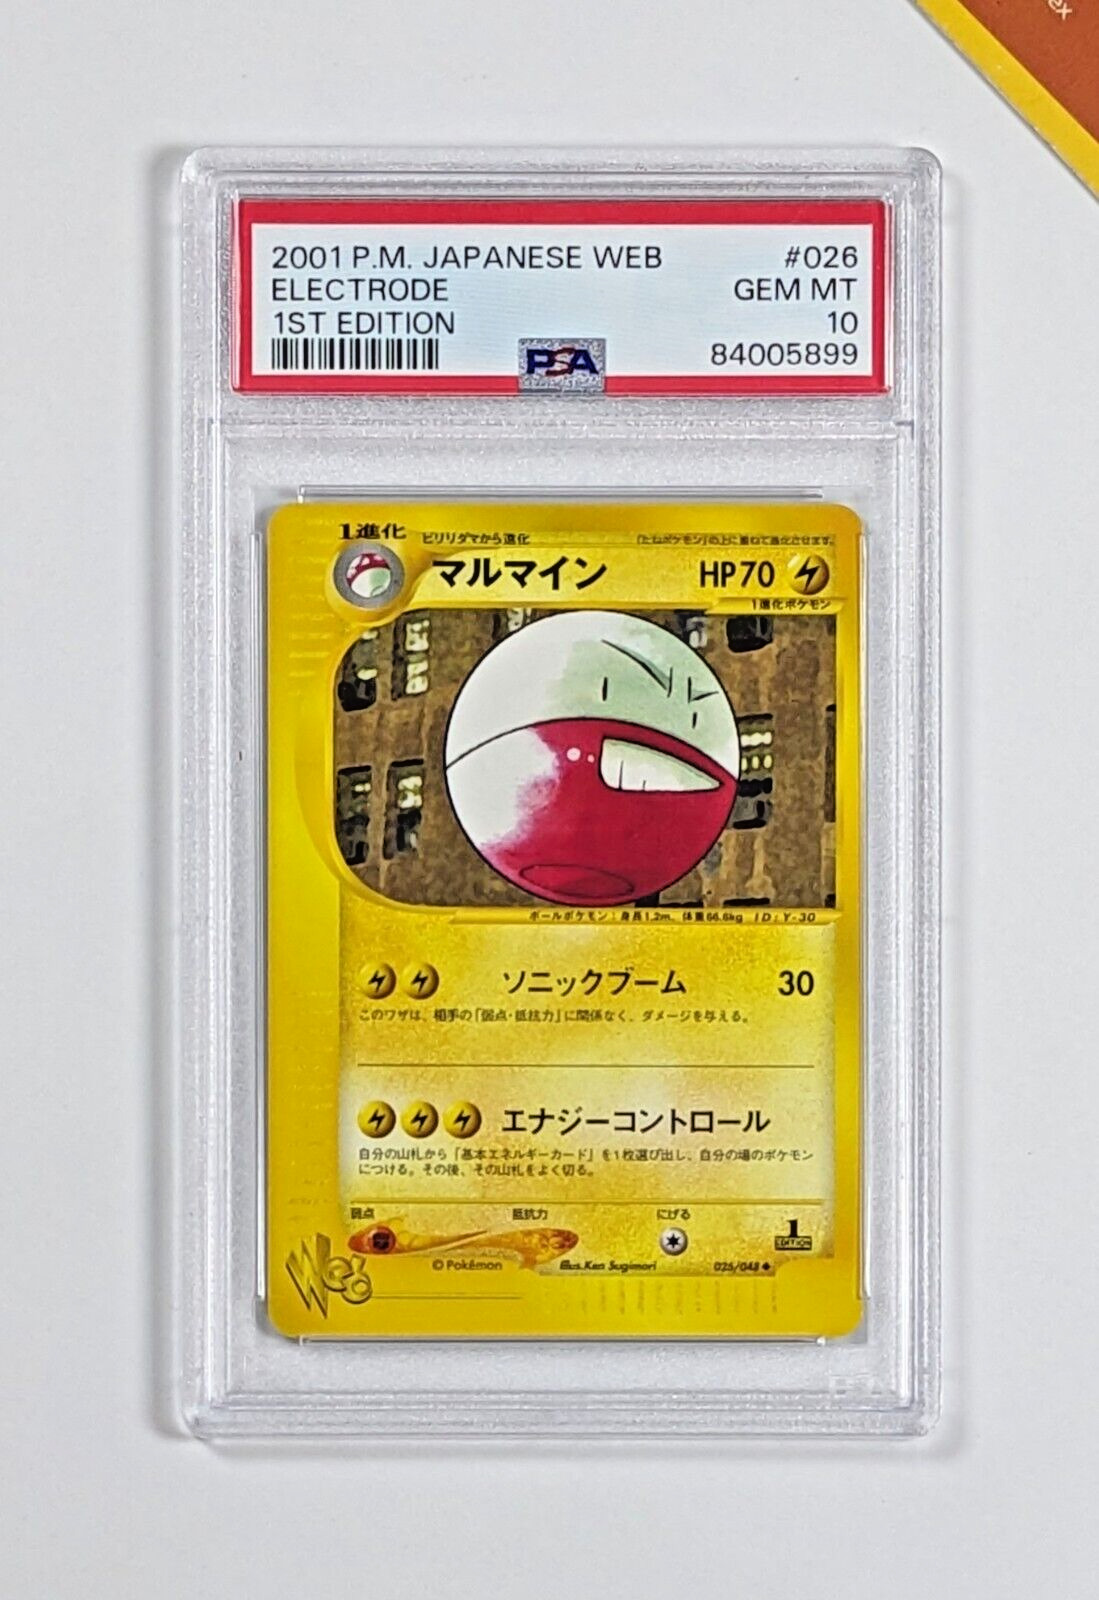 Pokemon PSA 10 Electrode #026 1st Edition Web 2001 Japanese